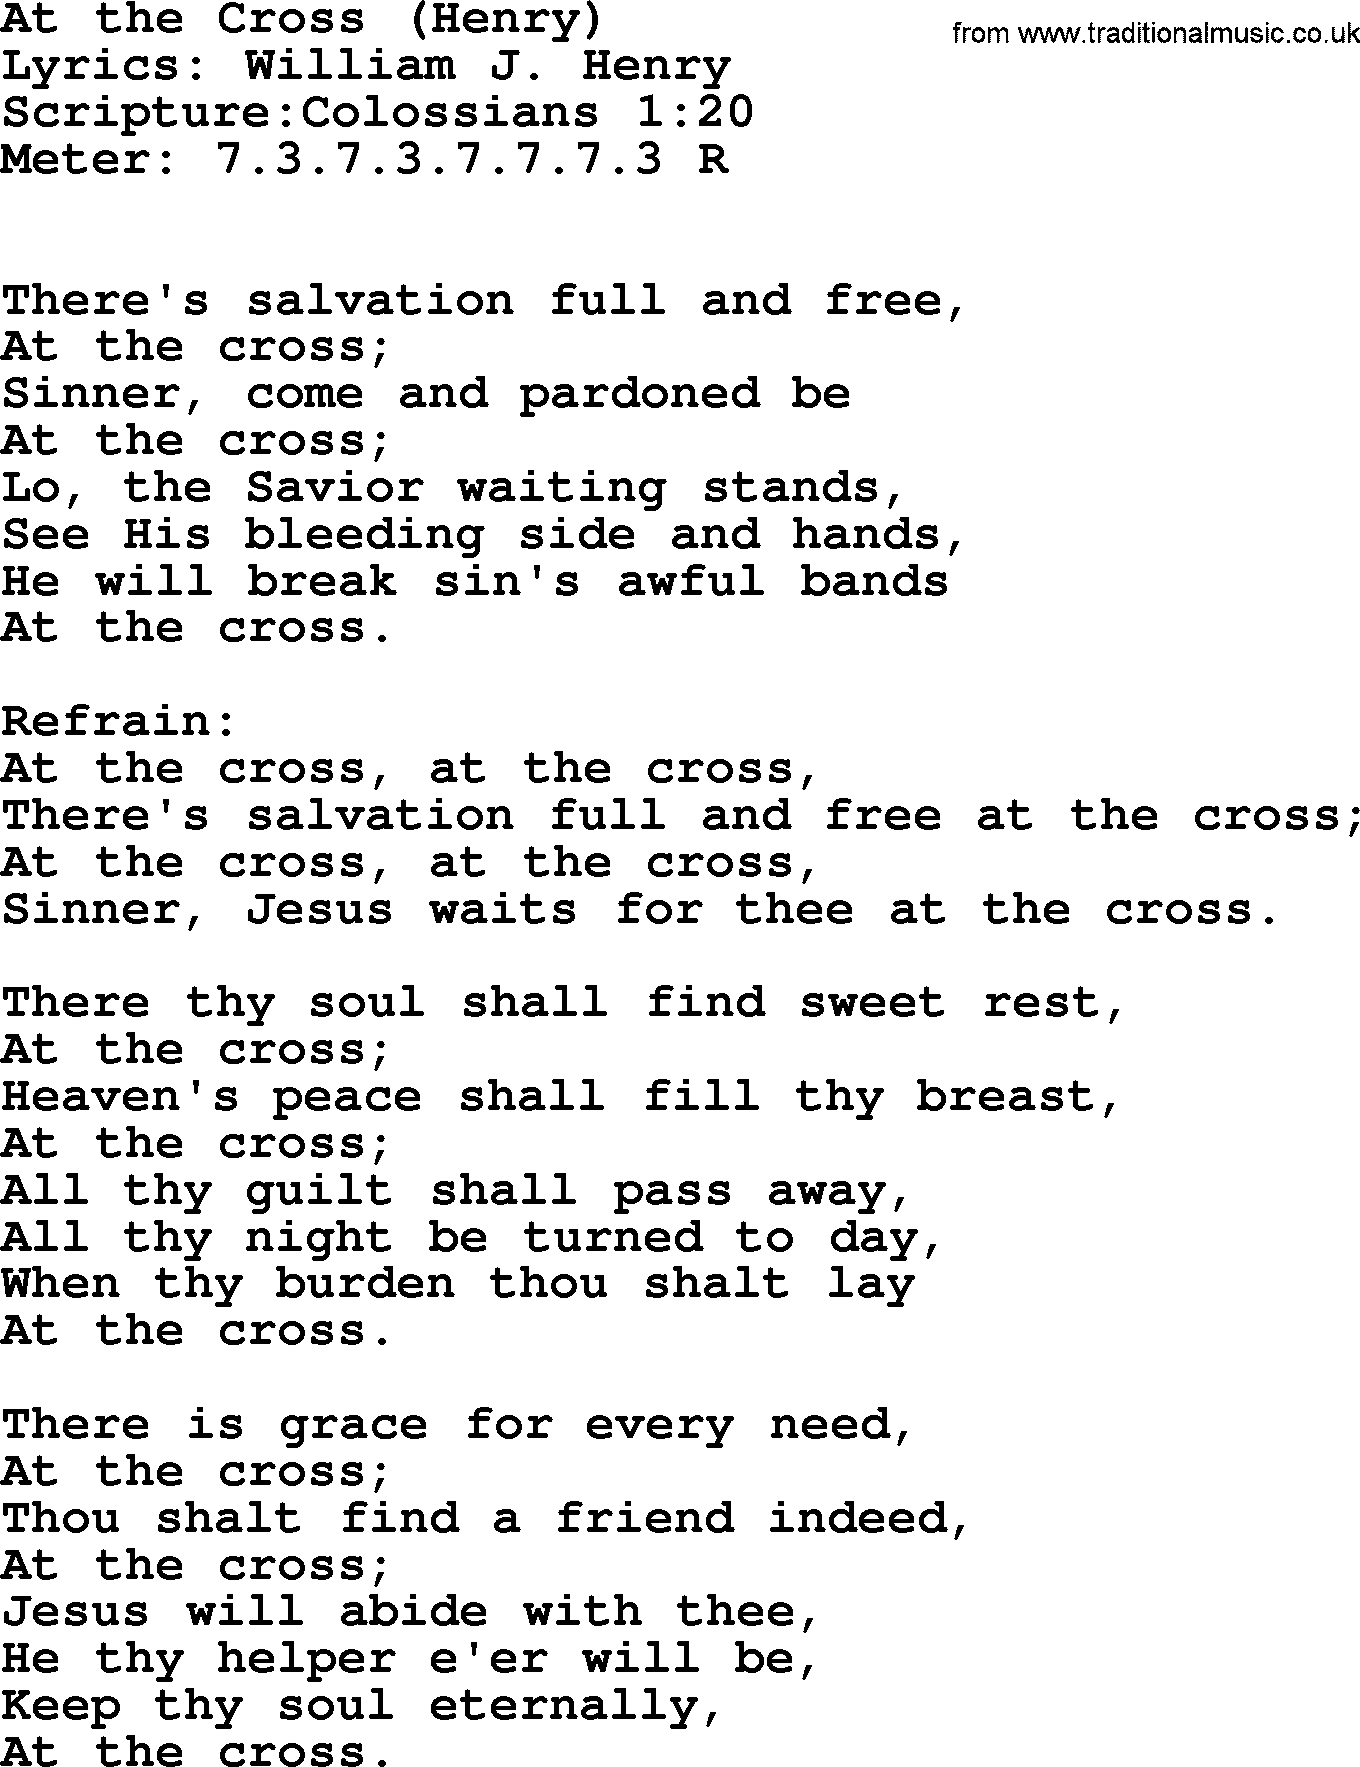 Good Old Hymns - At the Cross (Henry) - Lyrics, Sheetmusic, midi, Mp3 ...